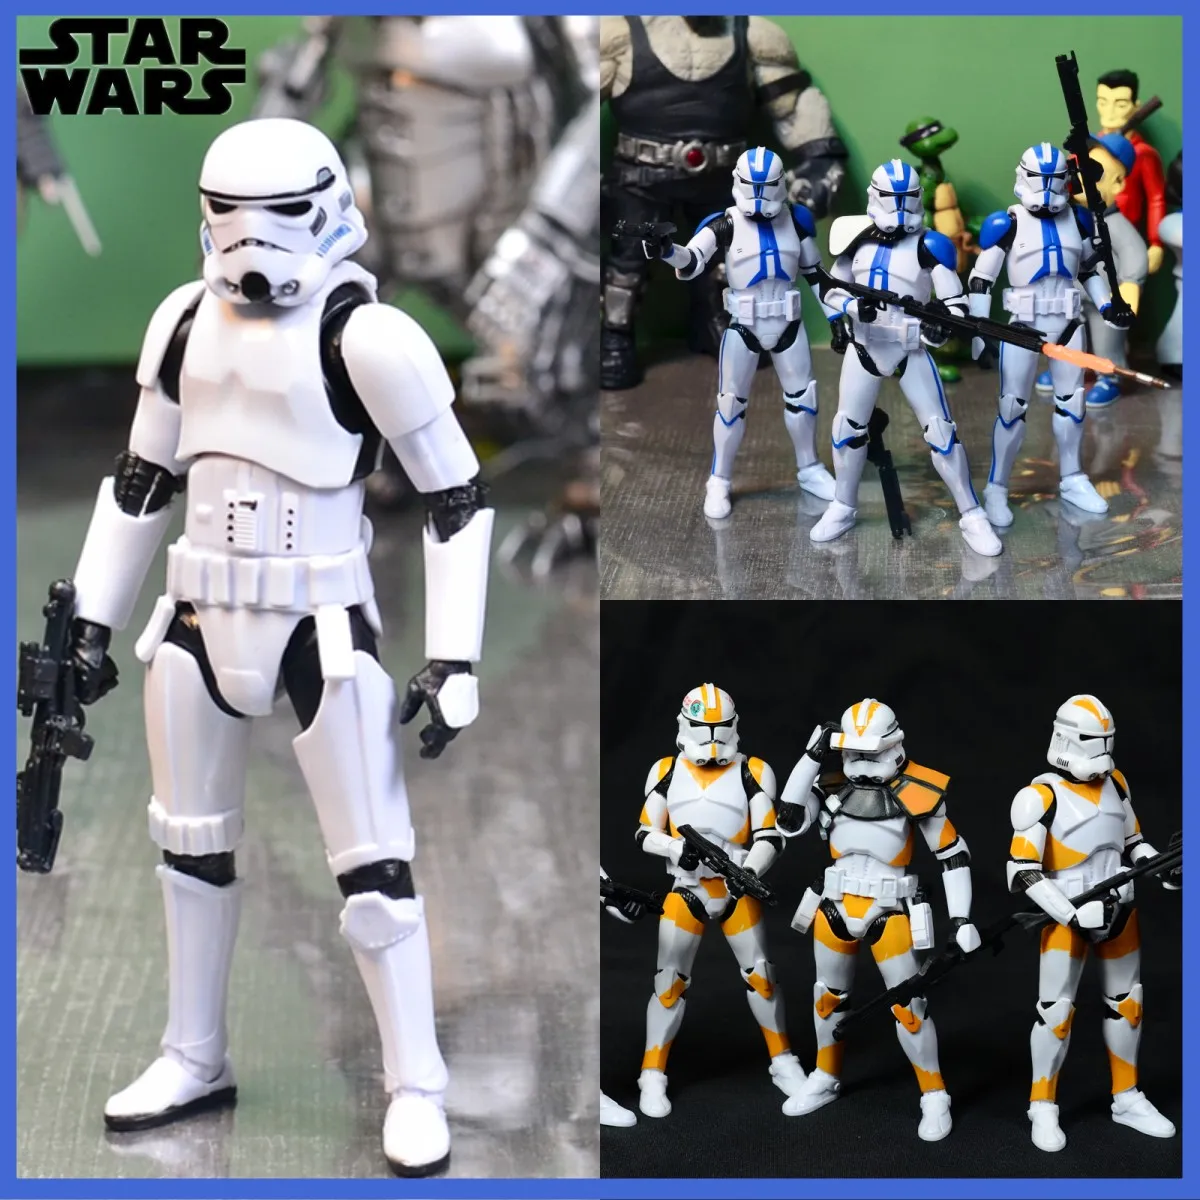 

Star Wars 212th Arc Trooper Commander Specialist Waxer Boil 6" Action Figure Phase 2 Ii Battalion Clone Trooper Model